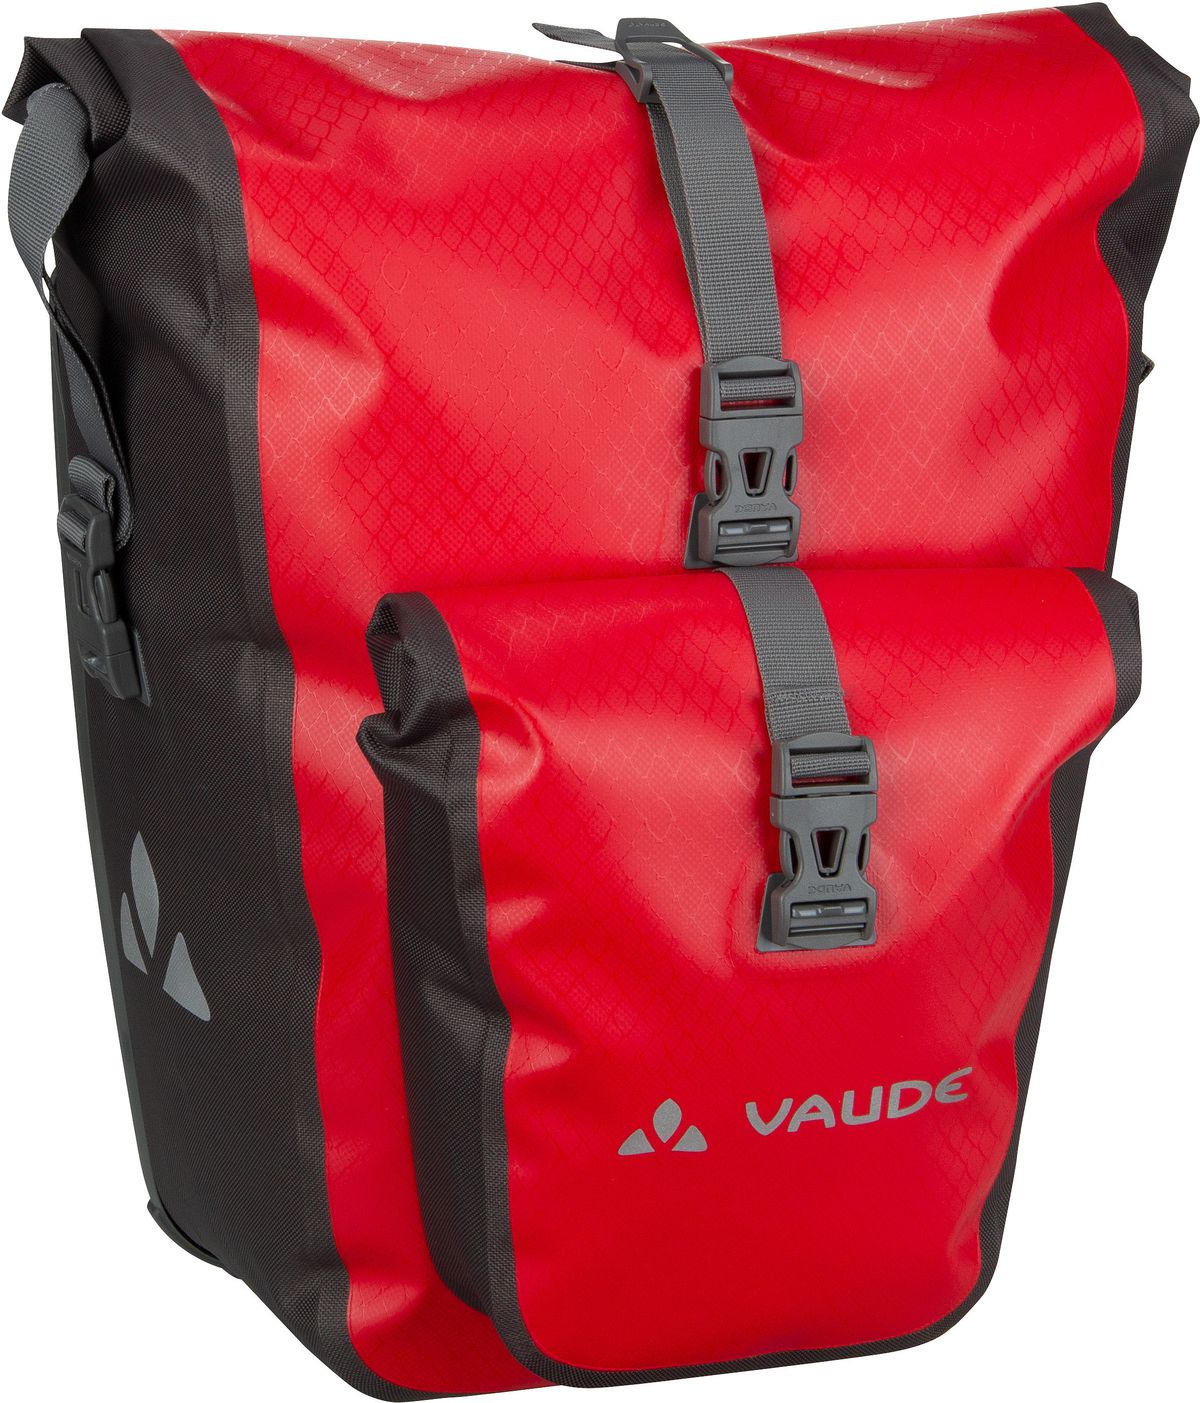 Vaude  Aqua Back Plus Single - Fahrradtasche - Rot (Red)